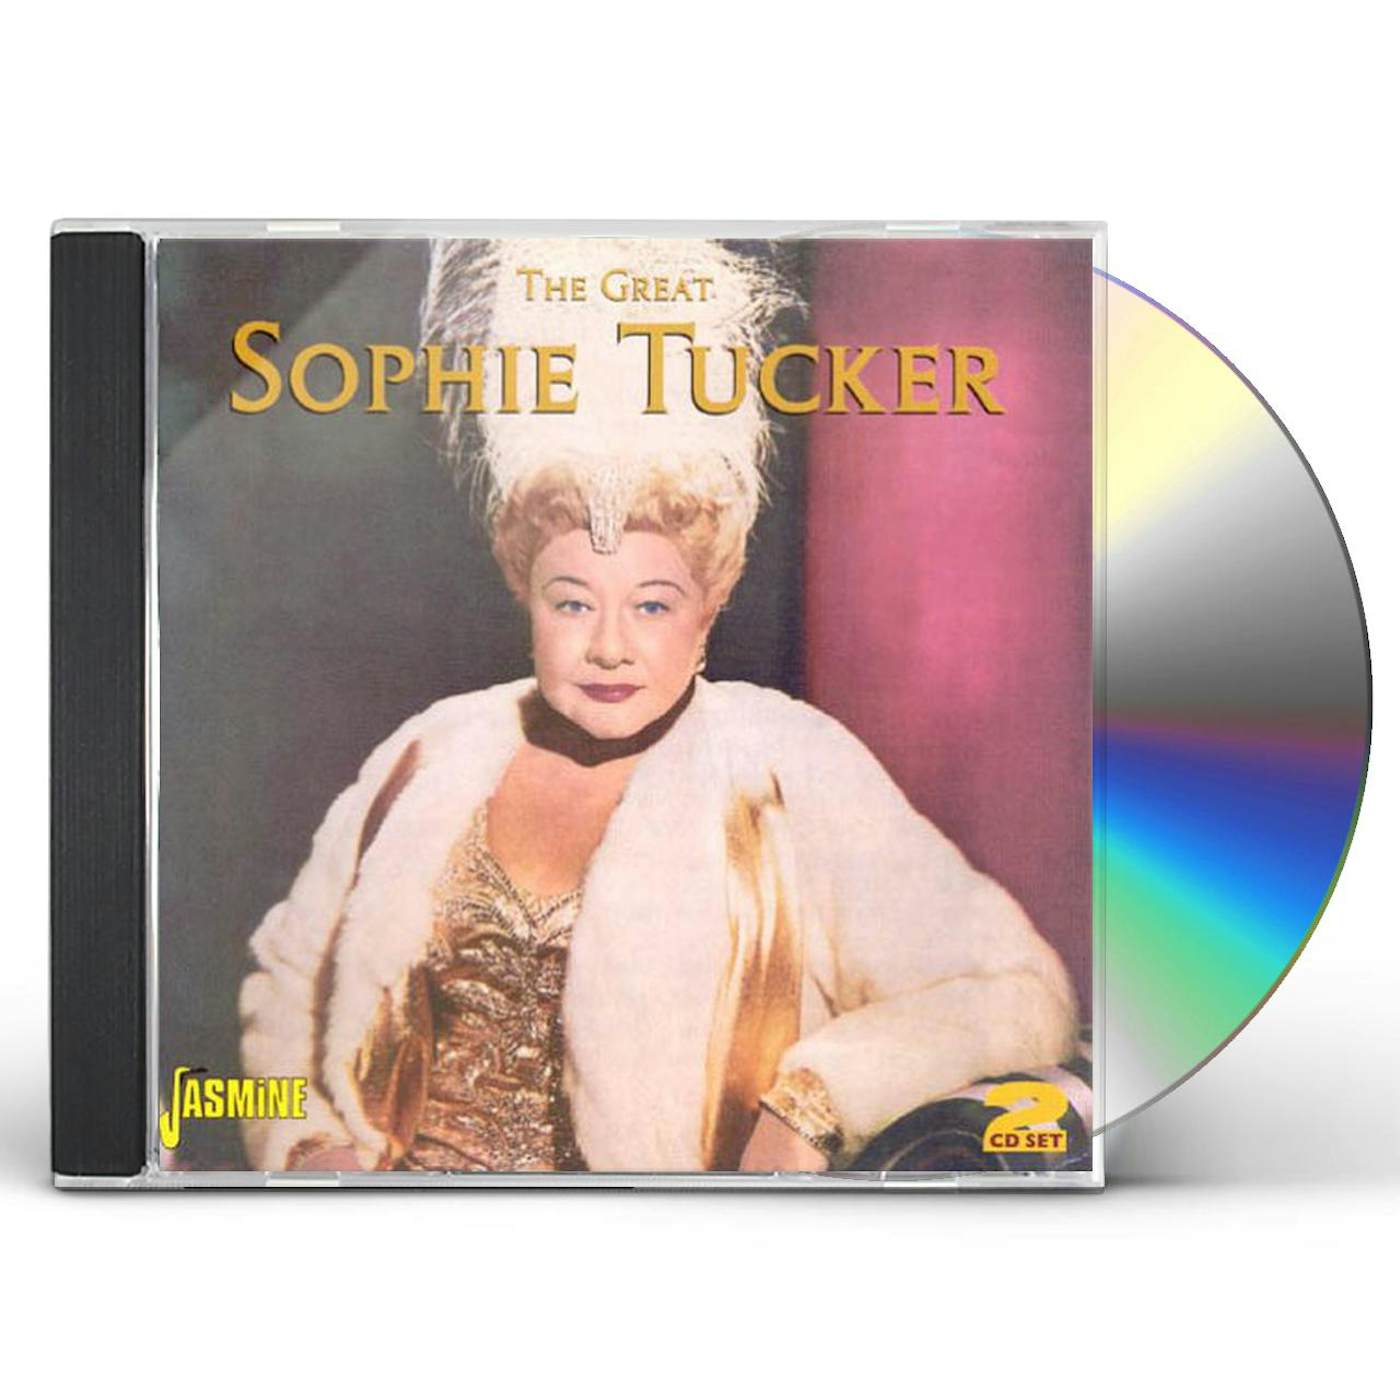 GREAT SOPHIE TUCKER CD